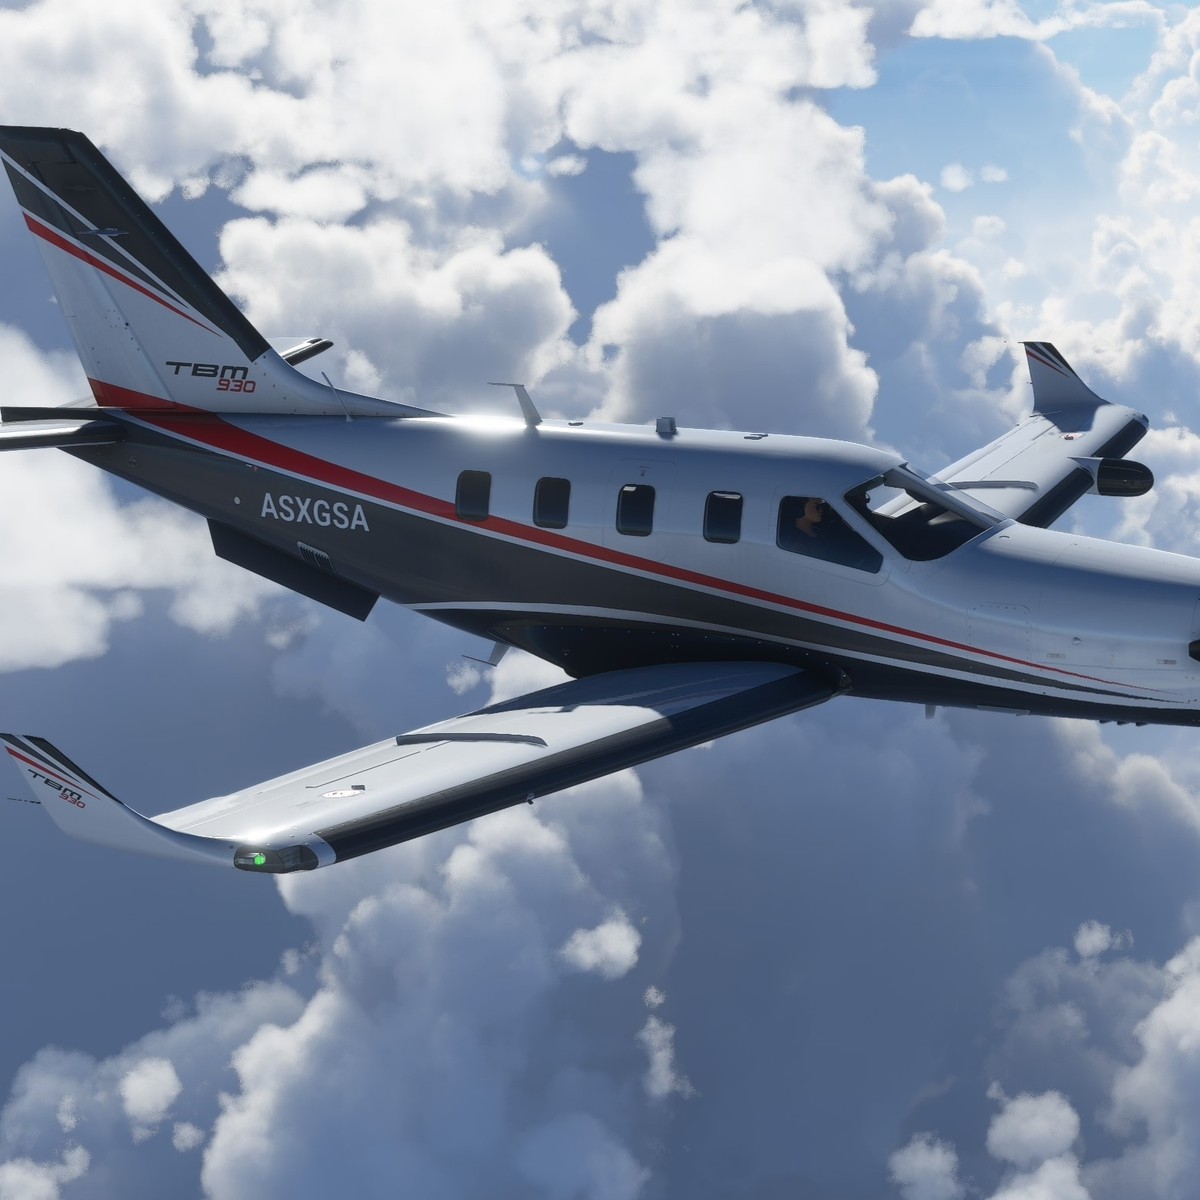 Microsoft Flight Simulator - recensione